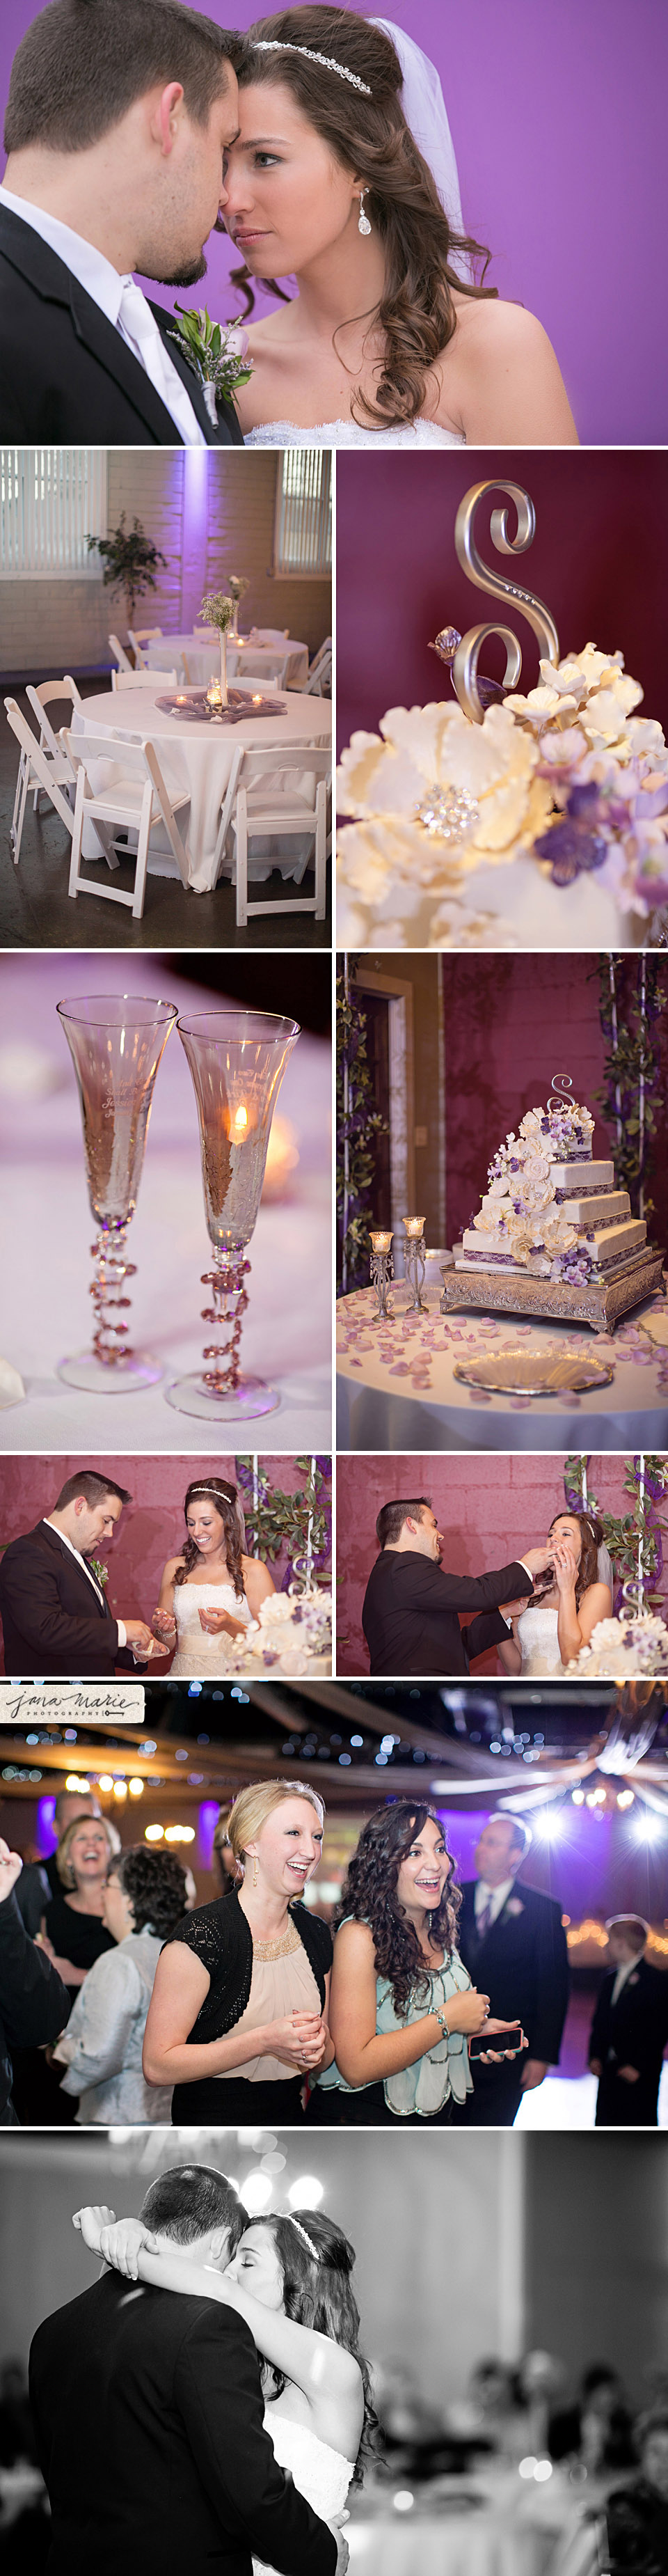 Heritage Hall, Kris Nardini, Karen Lanning, Liberty wedding venues, Jana Marie Photography, wedding cake